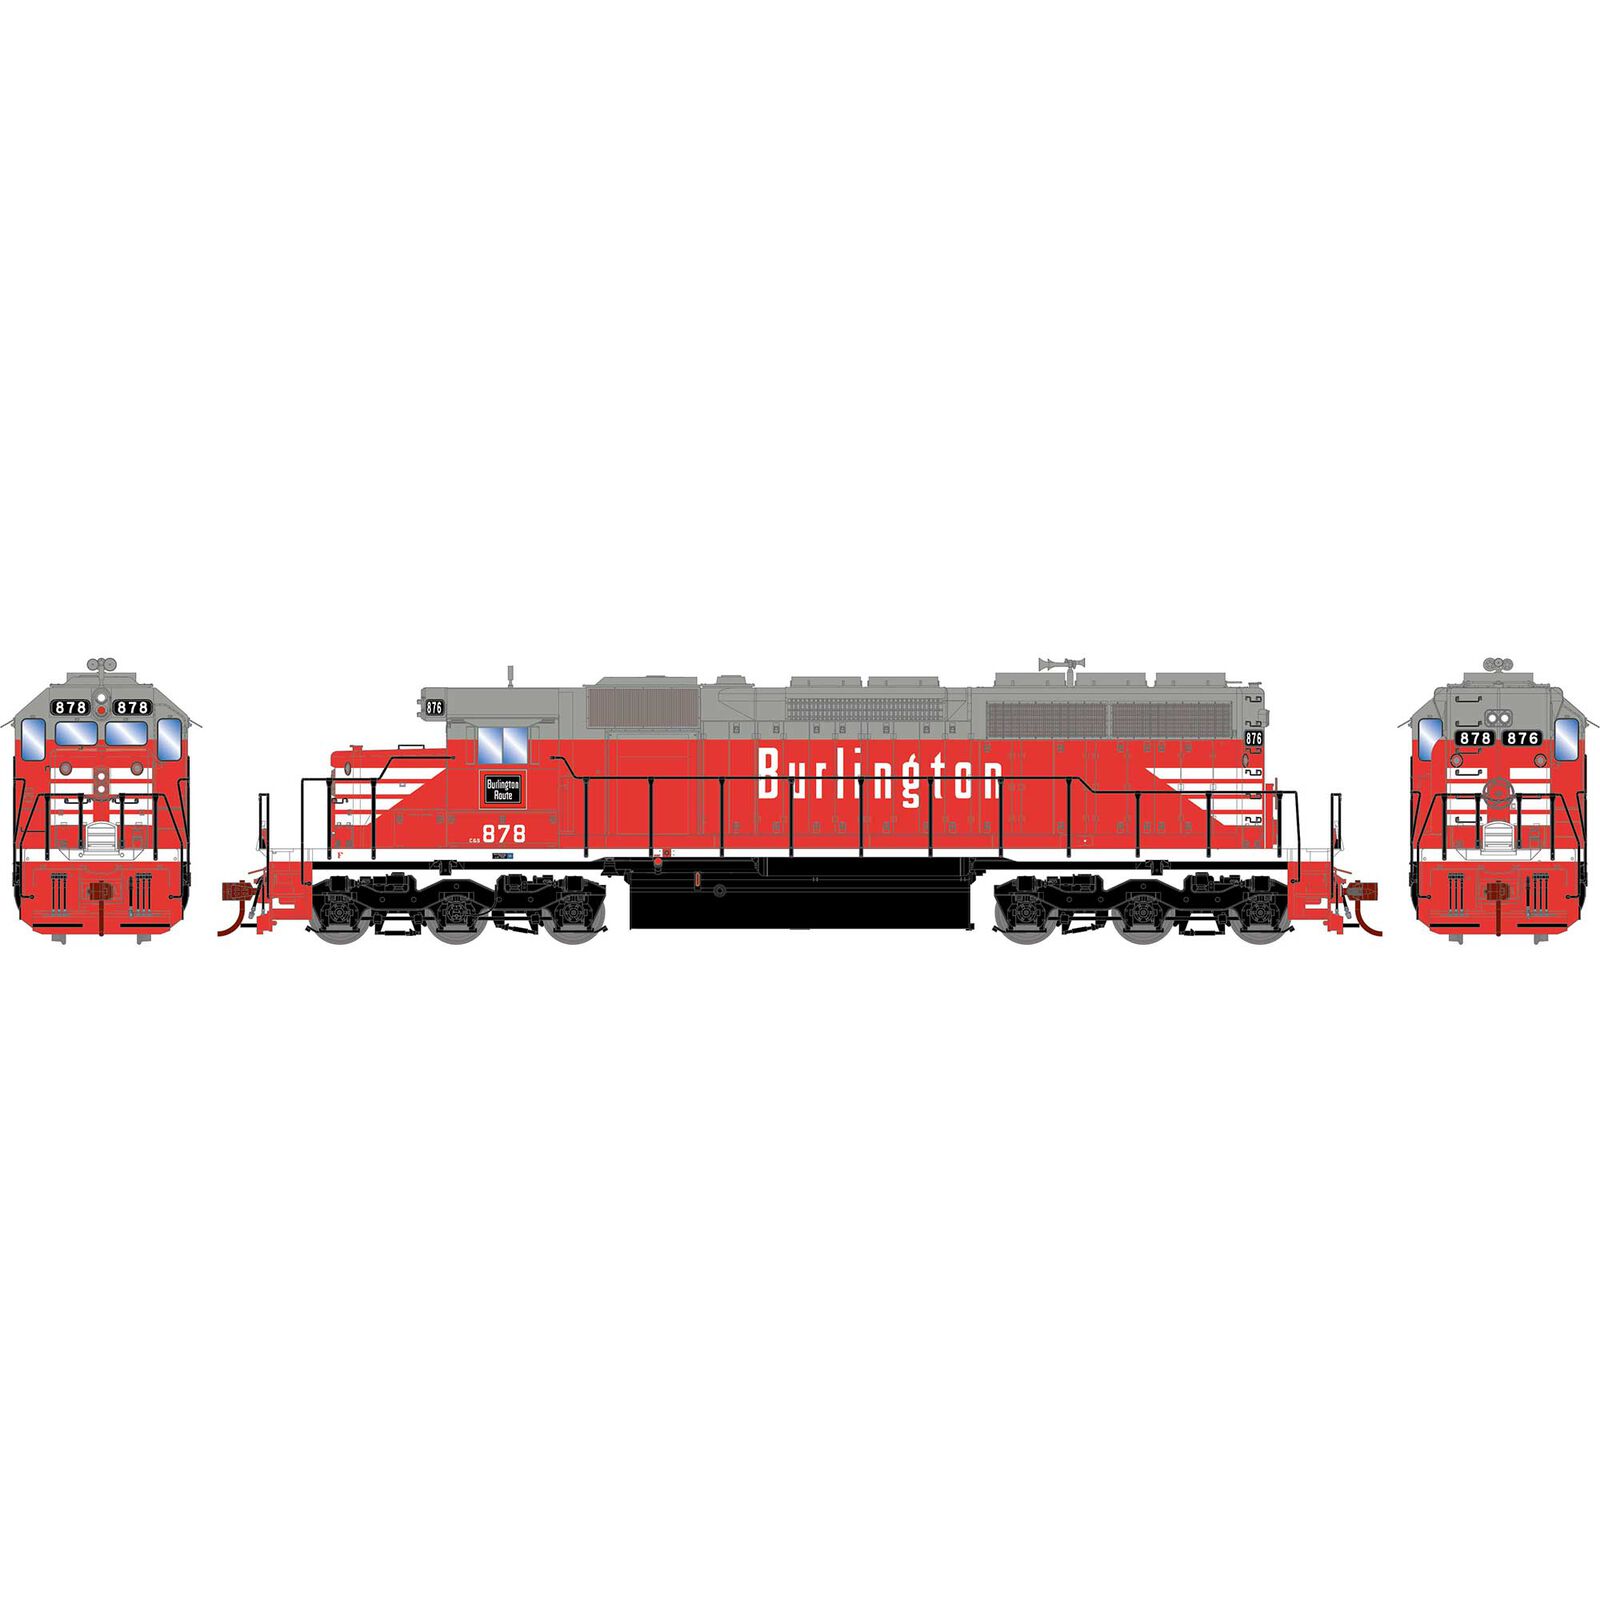 HO SD40 Locomotive with DCC & Sound, Colorado & Southern #878